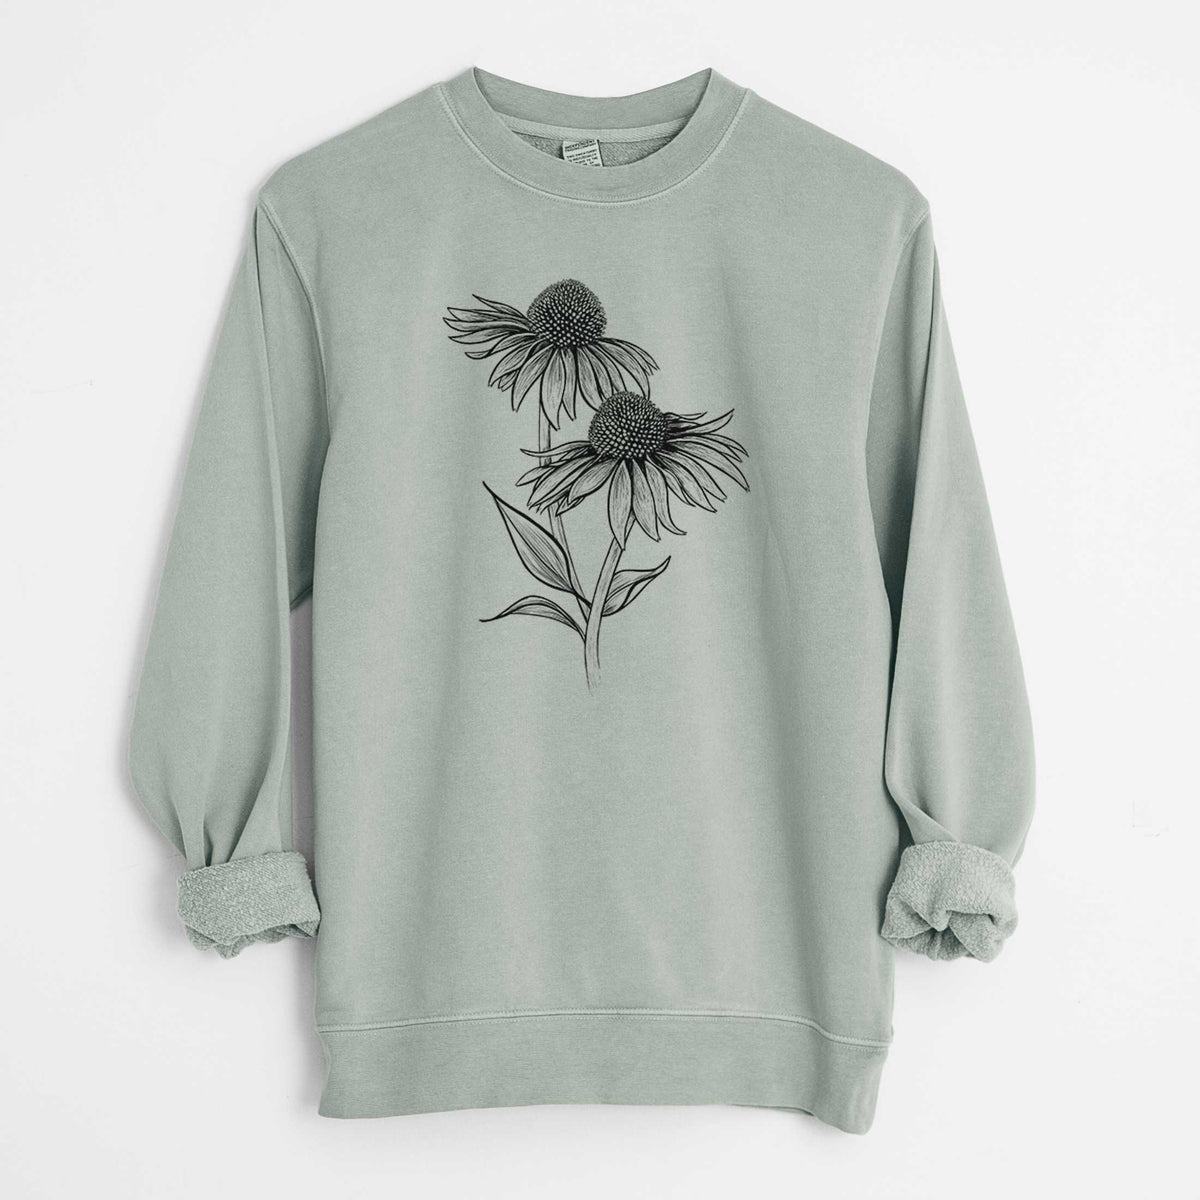 Coneflower - Echinacea purpurea - Unisex Pigment Dyed Crew Sweatshirt